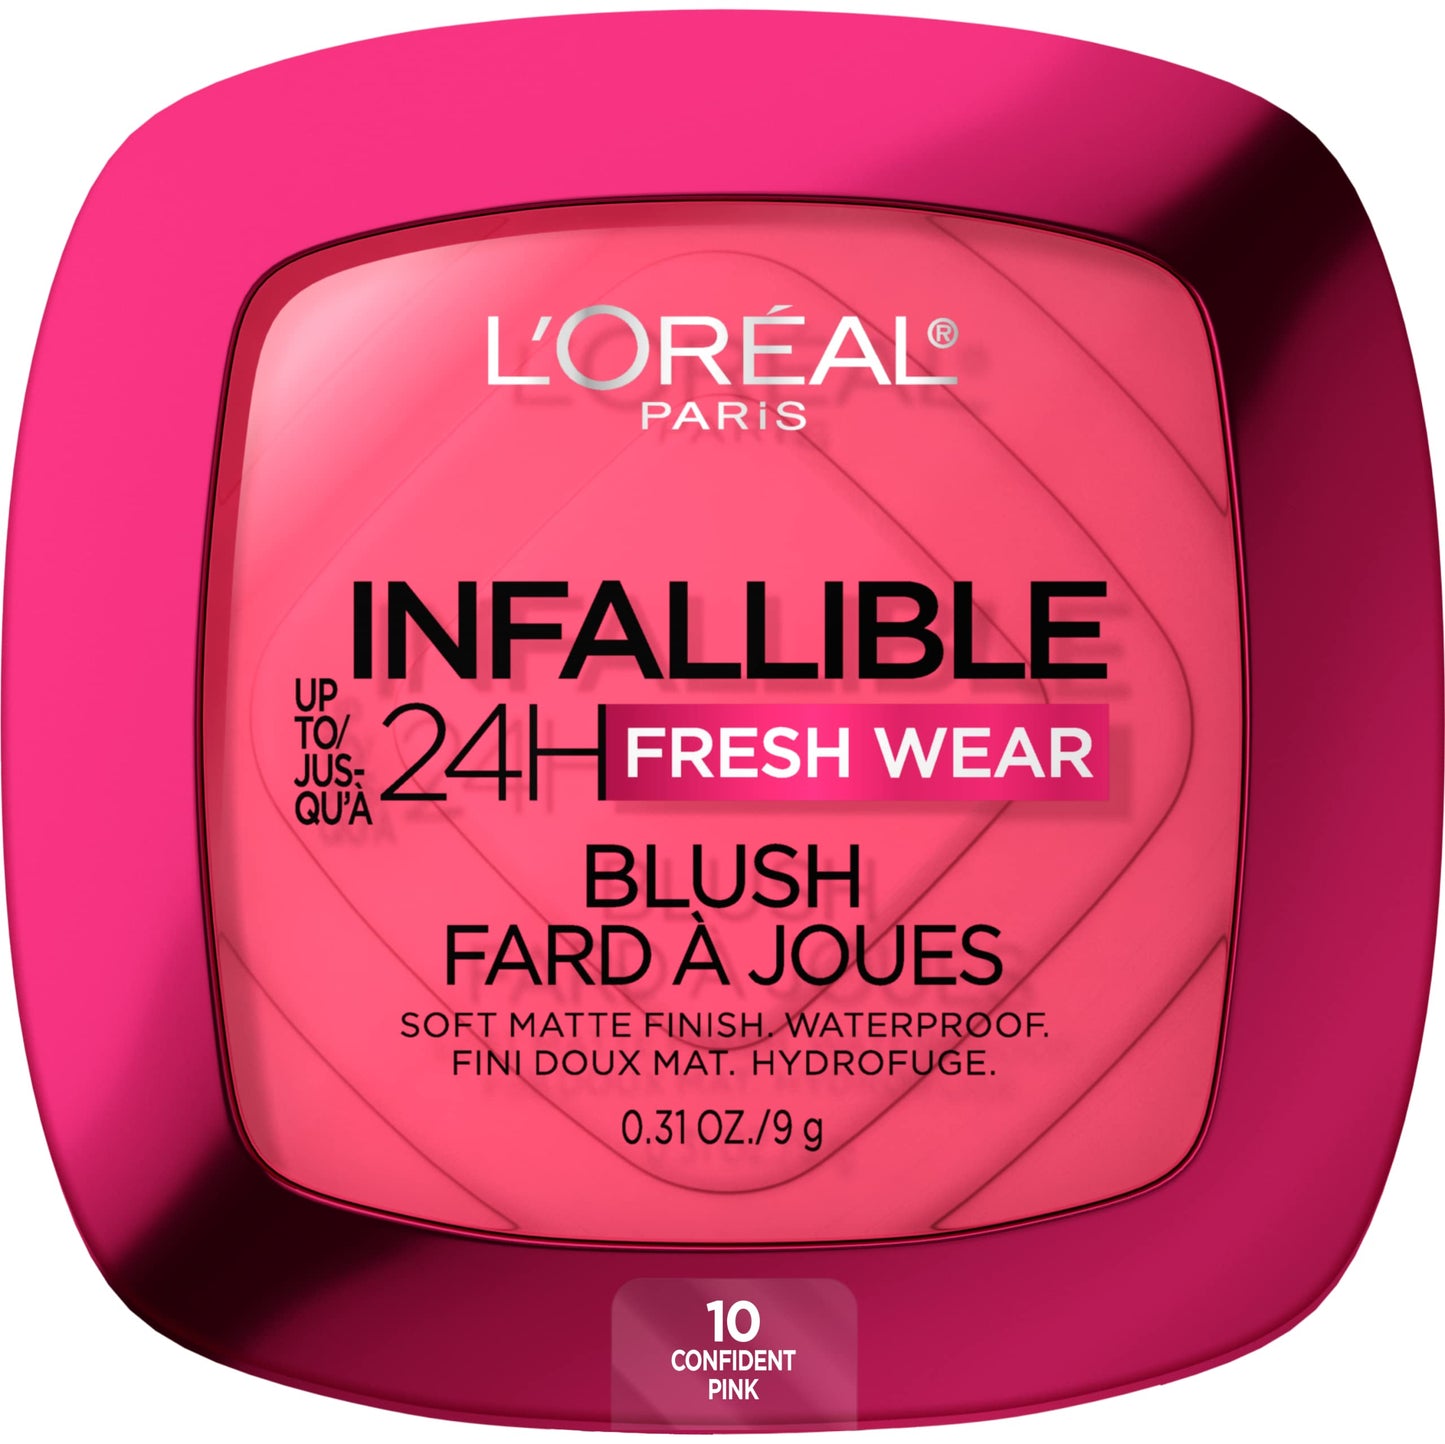 Loreal Infallible Blush 24H Fresh Wear